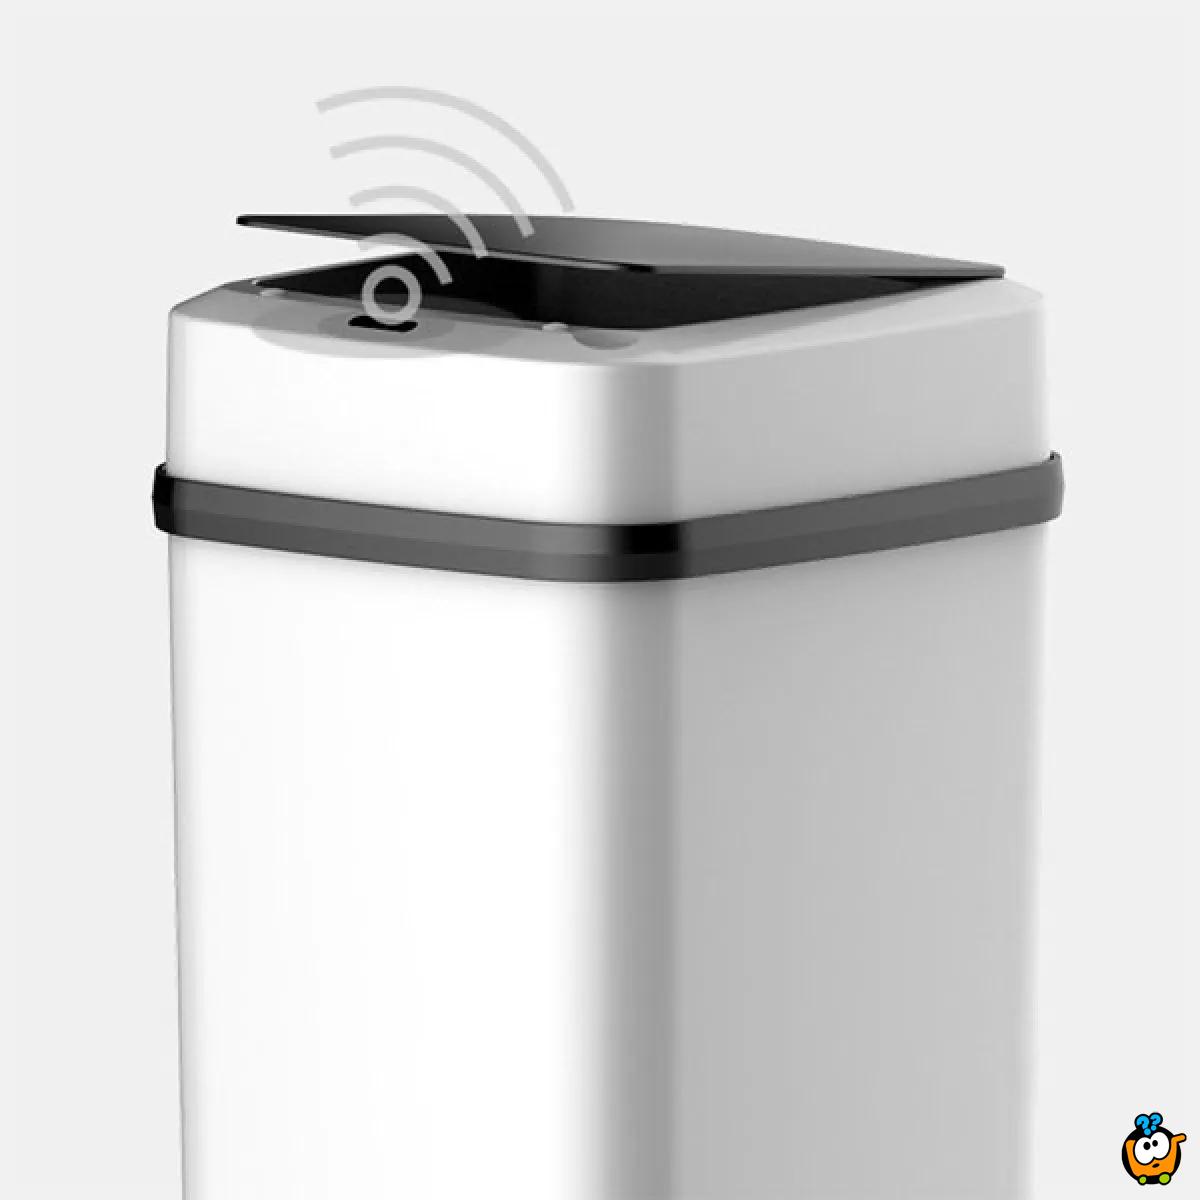 Smart trash can - Kanta za otpatke na senzor